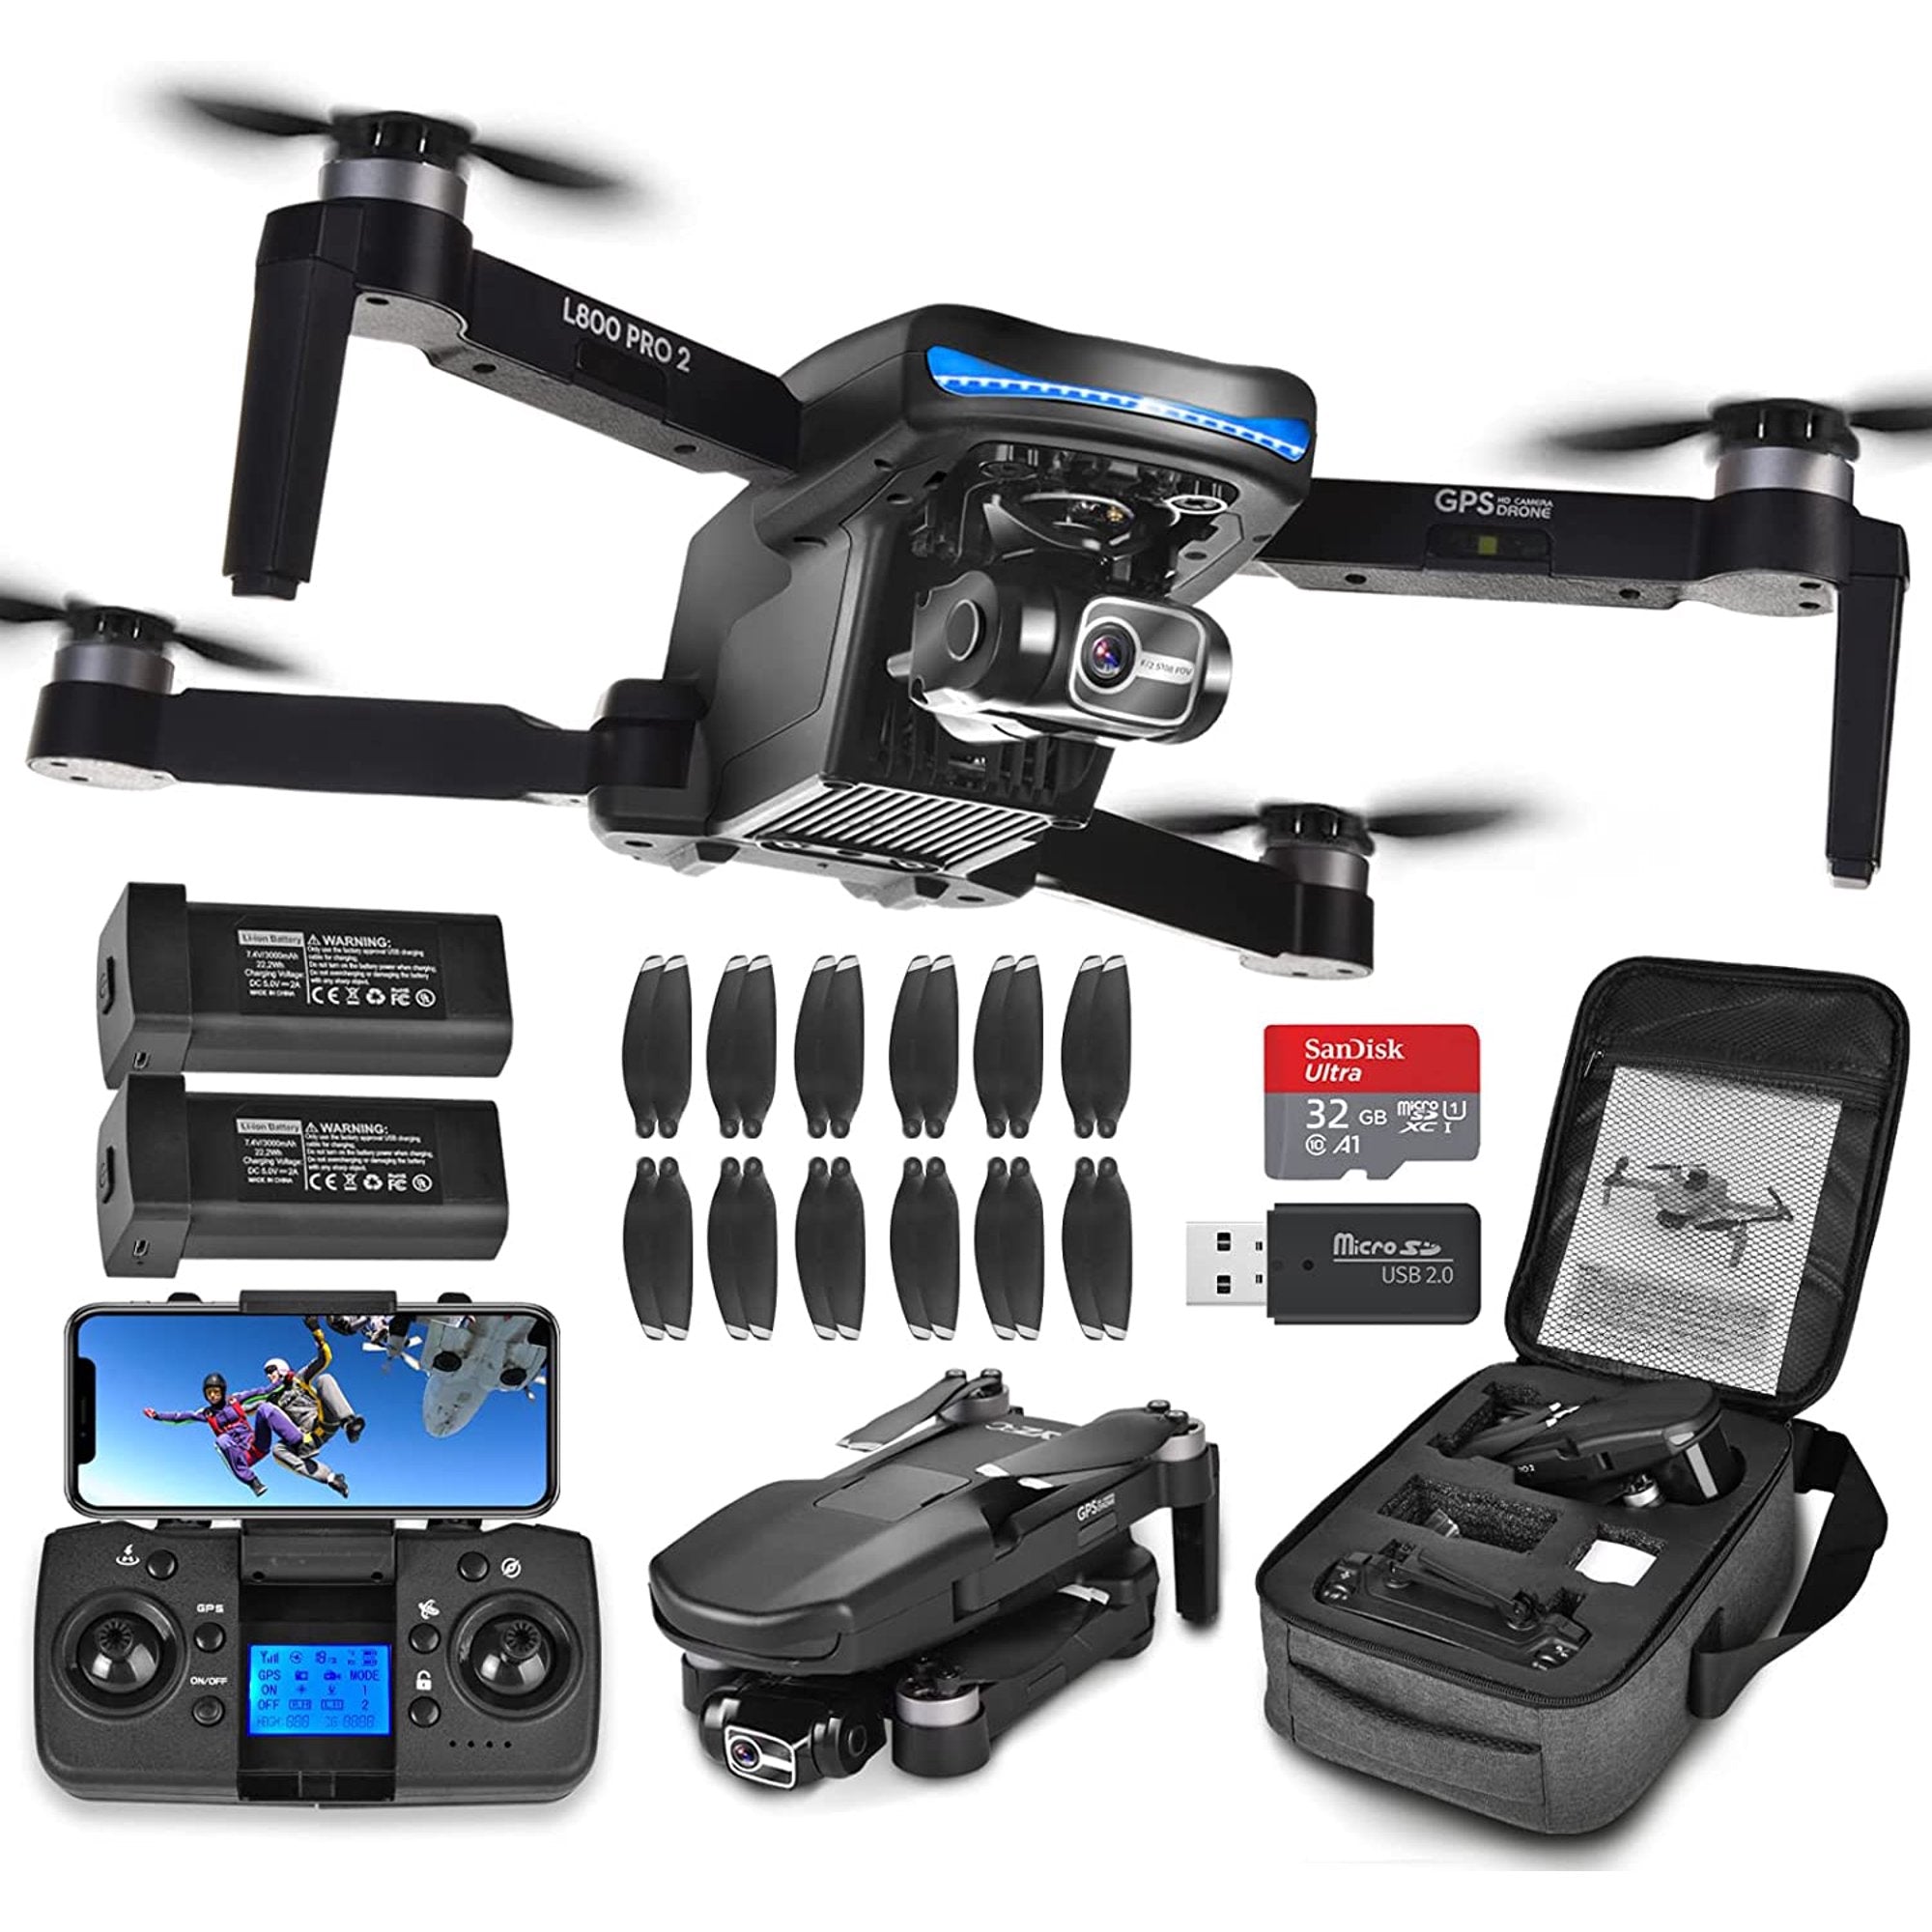 NMY L800 4K Camera Drone - 5G WiFi, EIS Technology, 50mins Flight, Brushless Motor